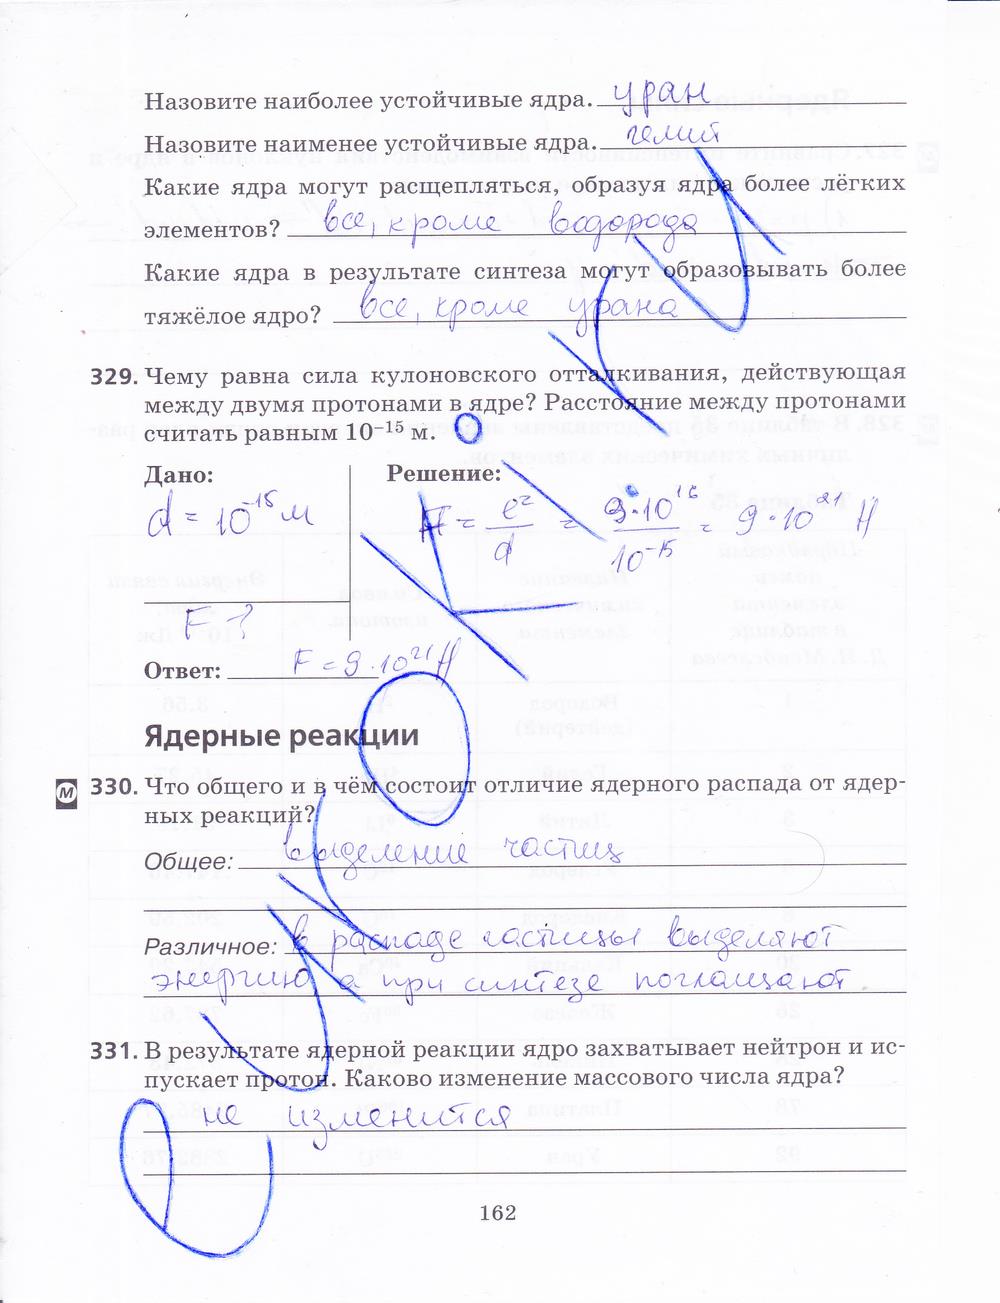 гдз 9 класс рабочая тетрадь страница 162 физика Пурышева, Важеевская, Чаругин